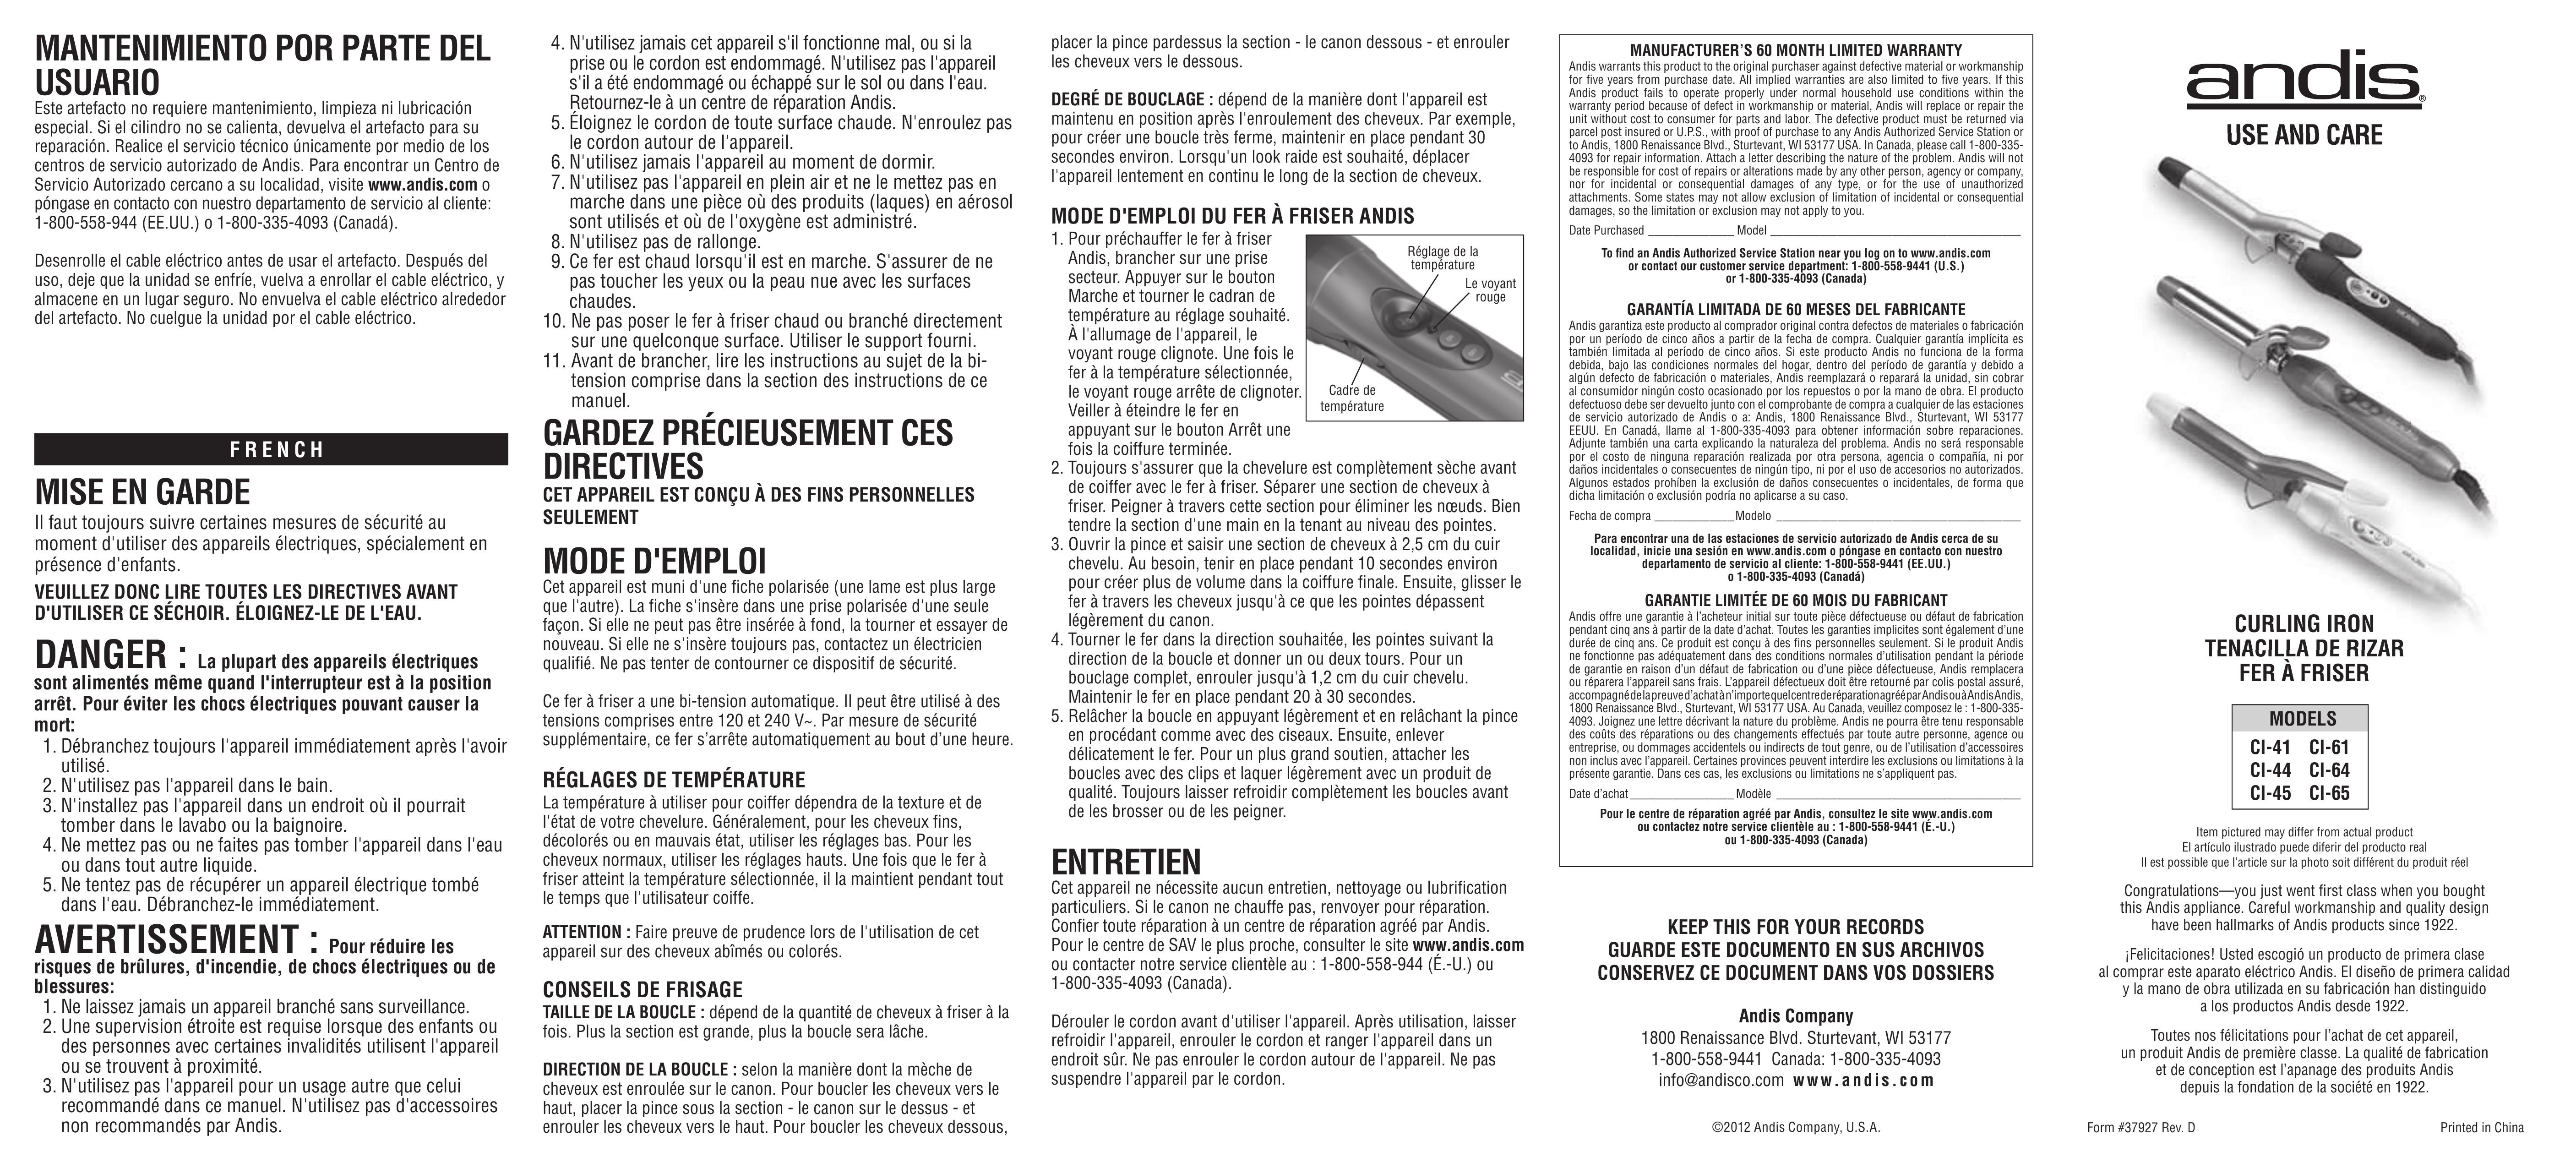 Andis Company CI-45 Styling Iron User Manual